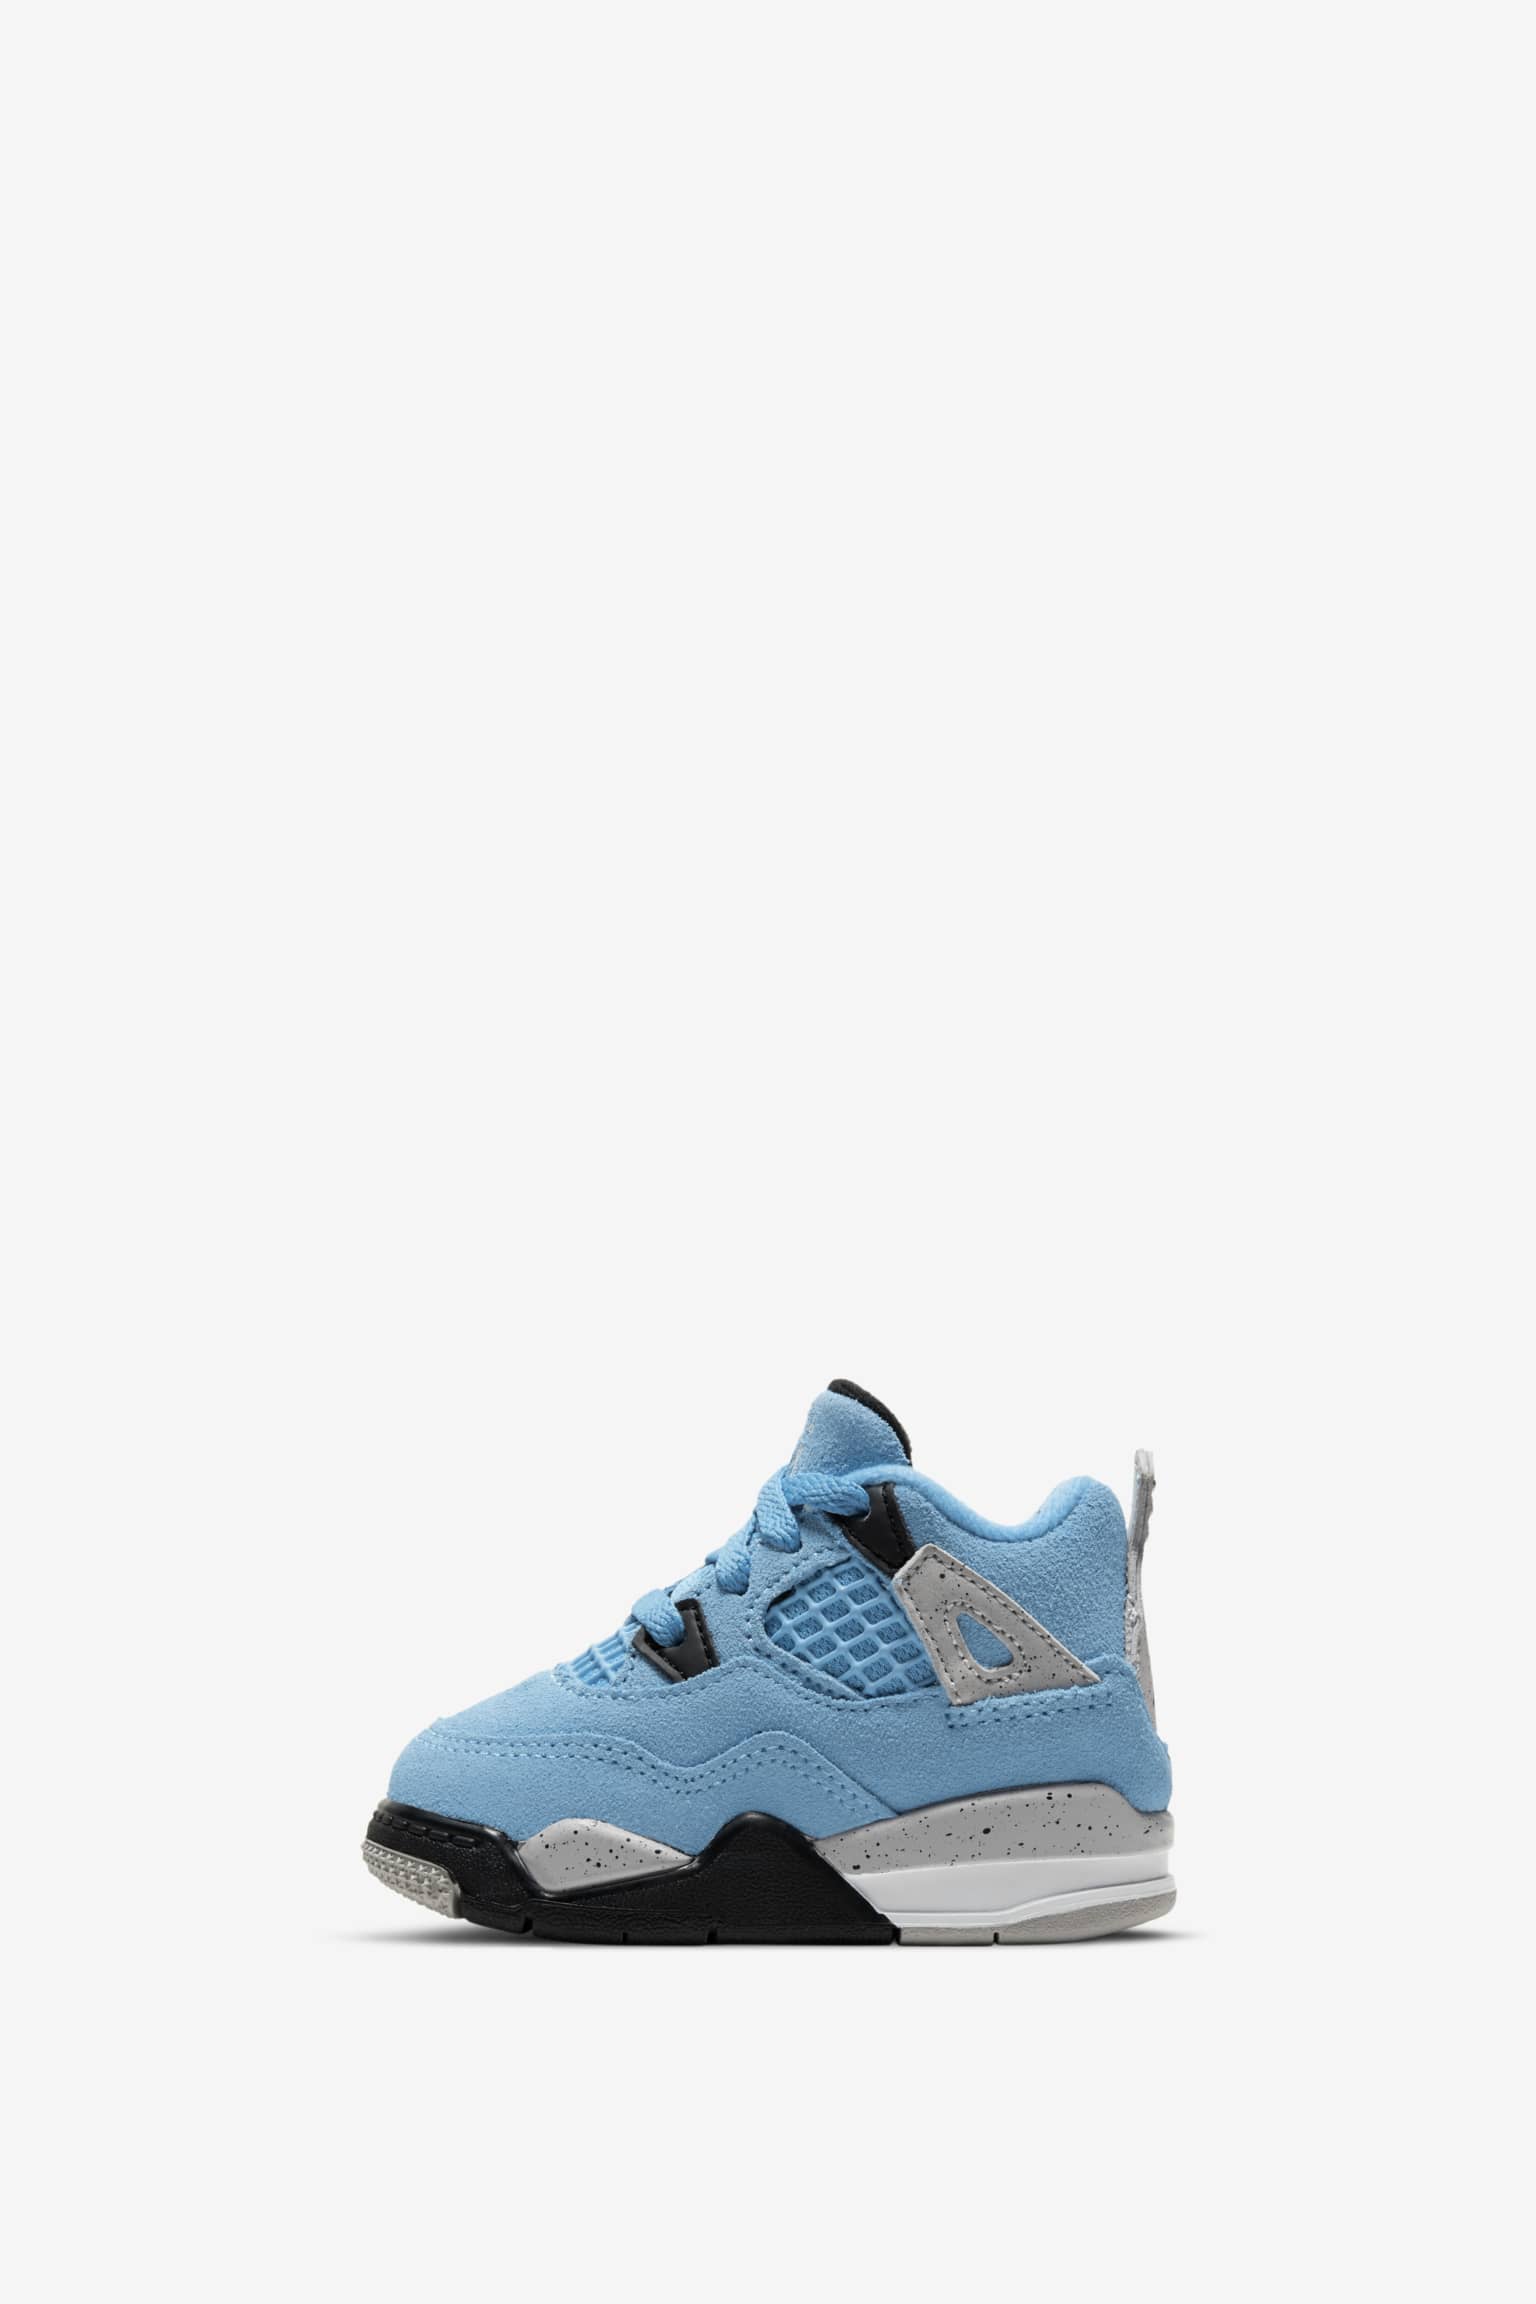 Air Jordan 4 University Blue Release Date Nike Snkrs In